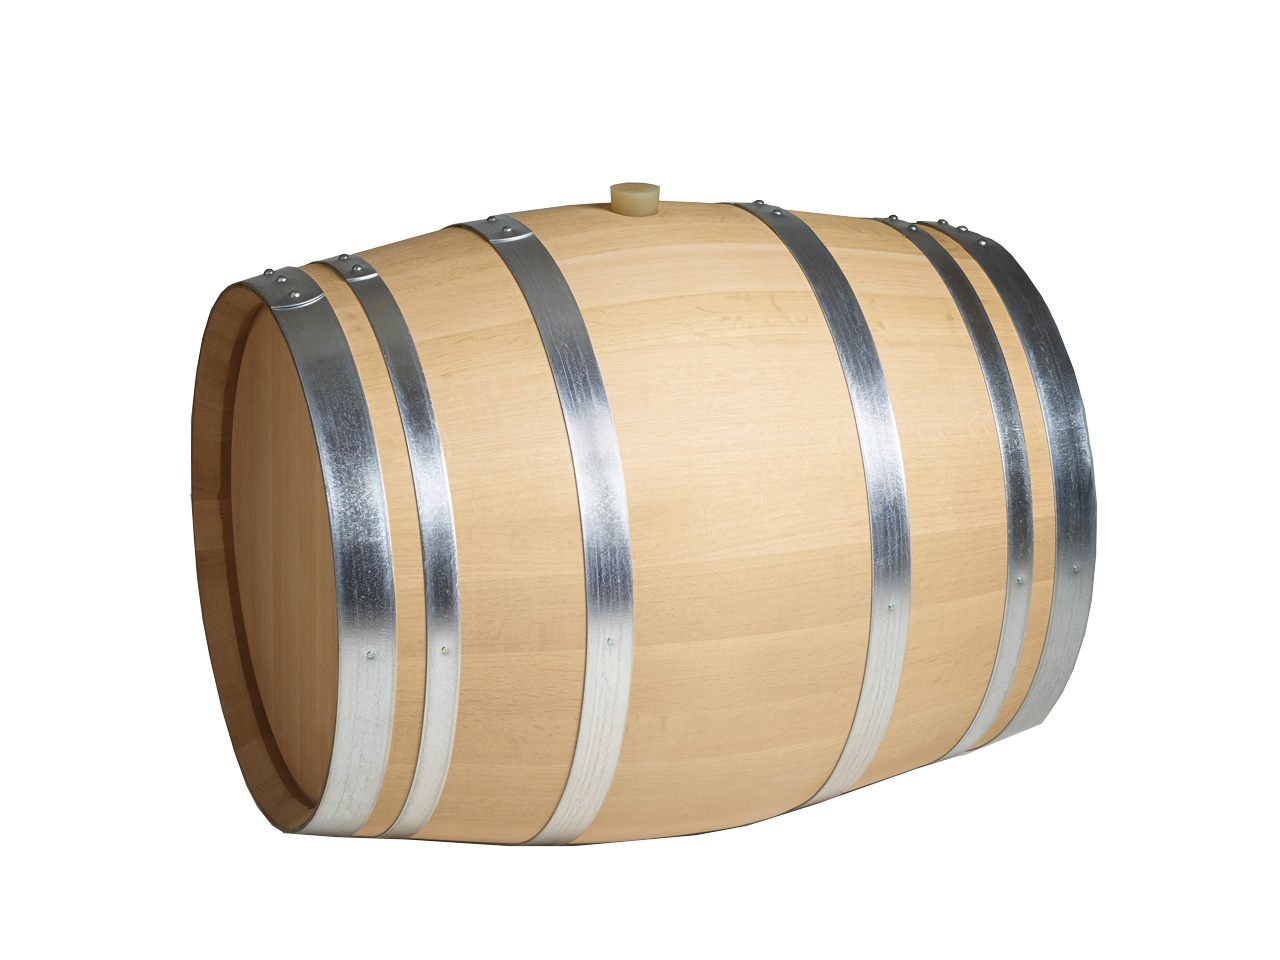  Barrel of Burgundy